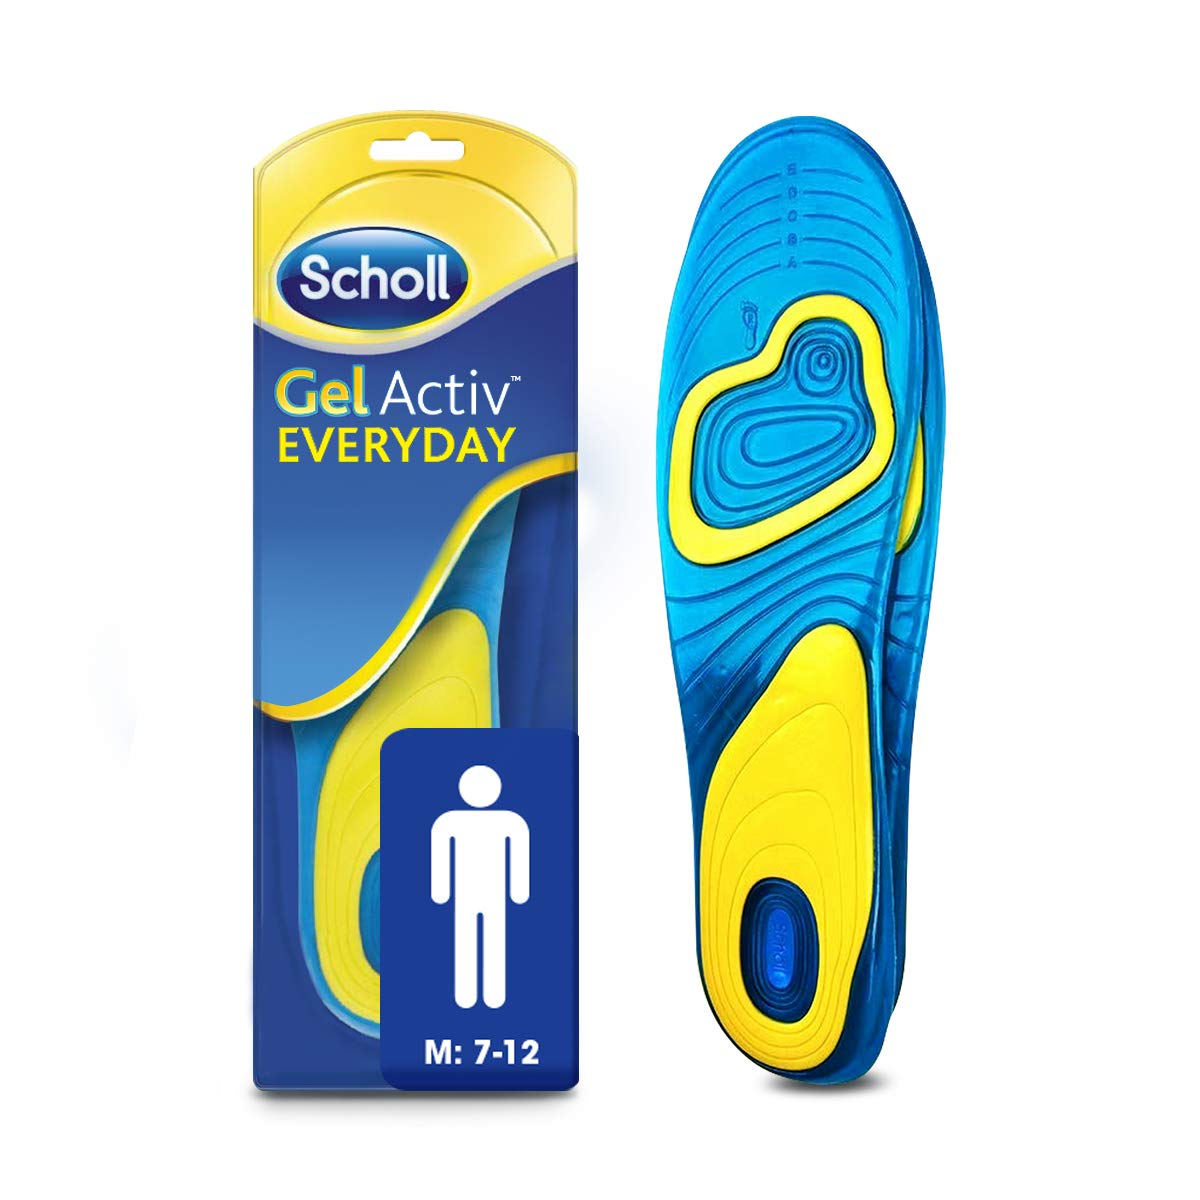 Scholl Men’s Gel Activ Everyday Insoles, UK Size 7 to 12